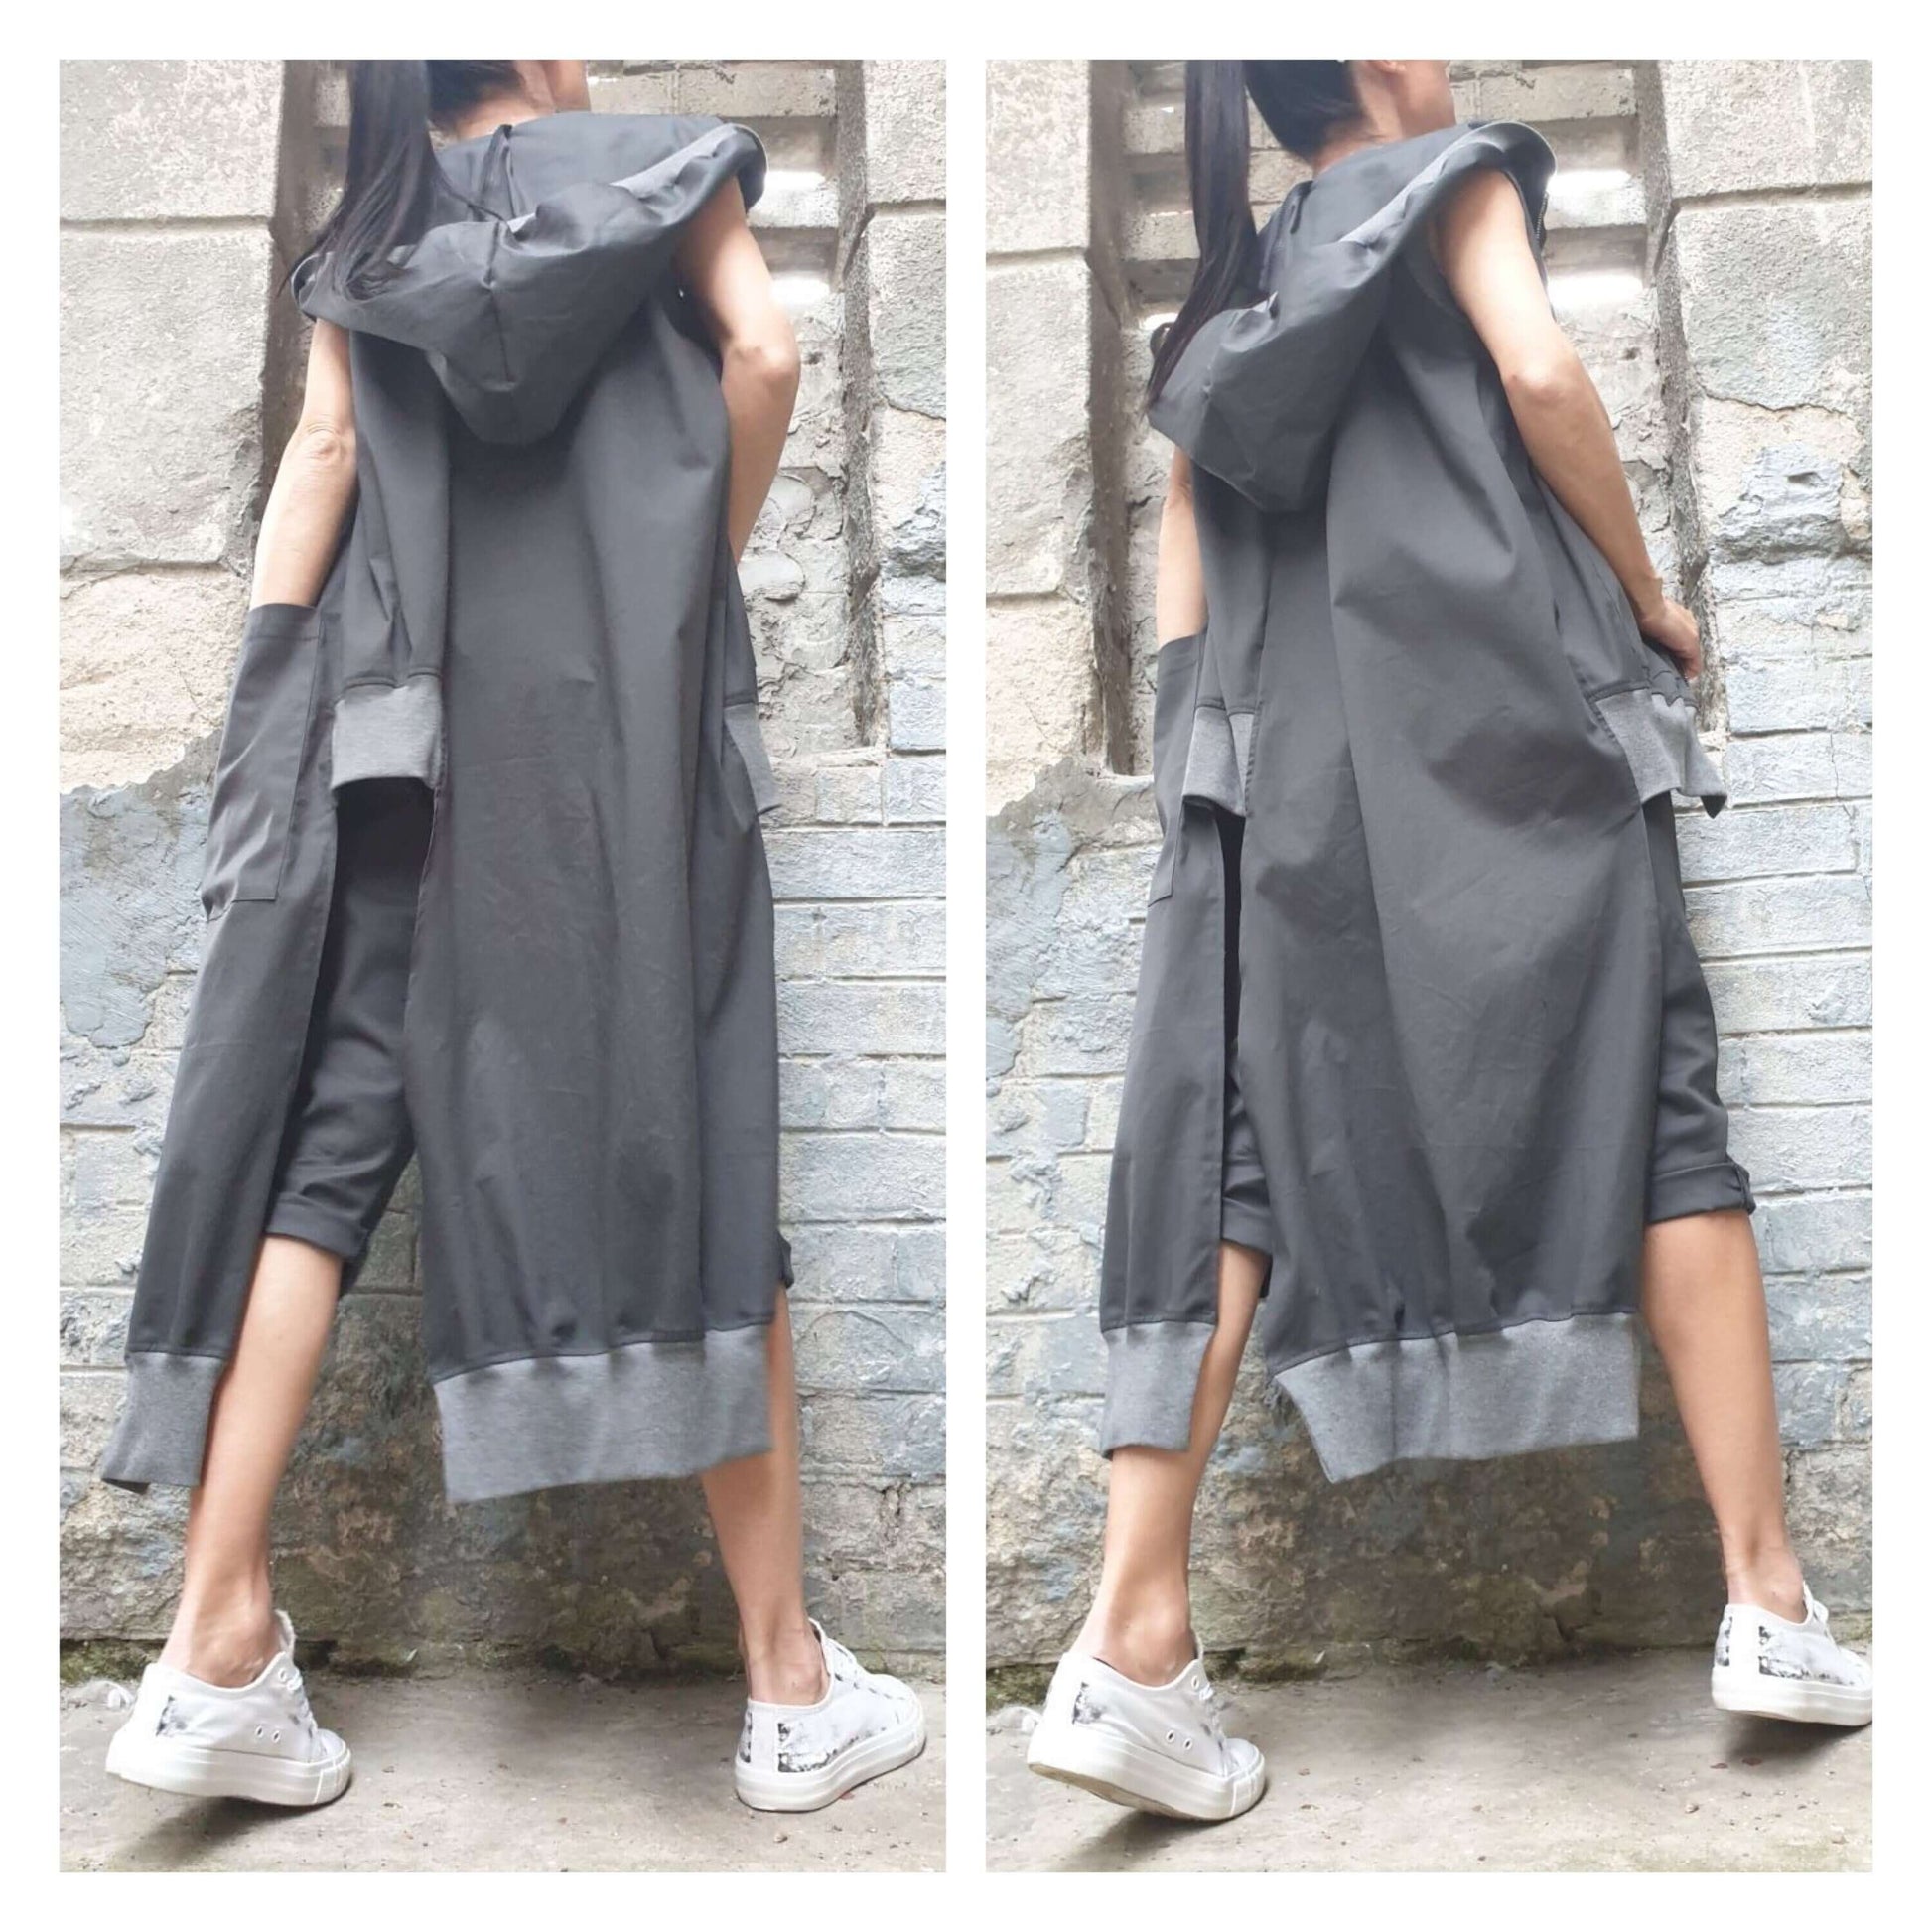 Grey Extravagant Vest - Handmade clothing from AngelBySilvia - Top Designer Brands 